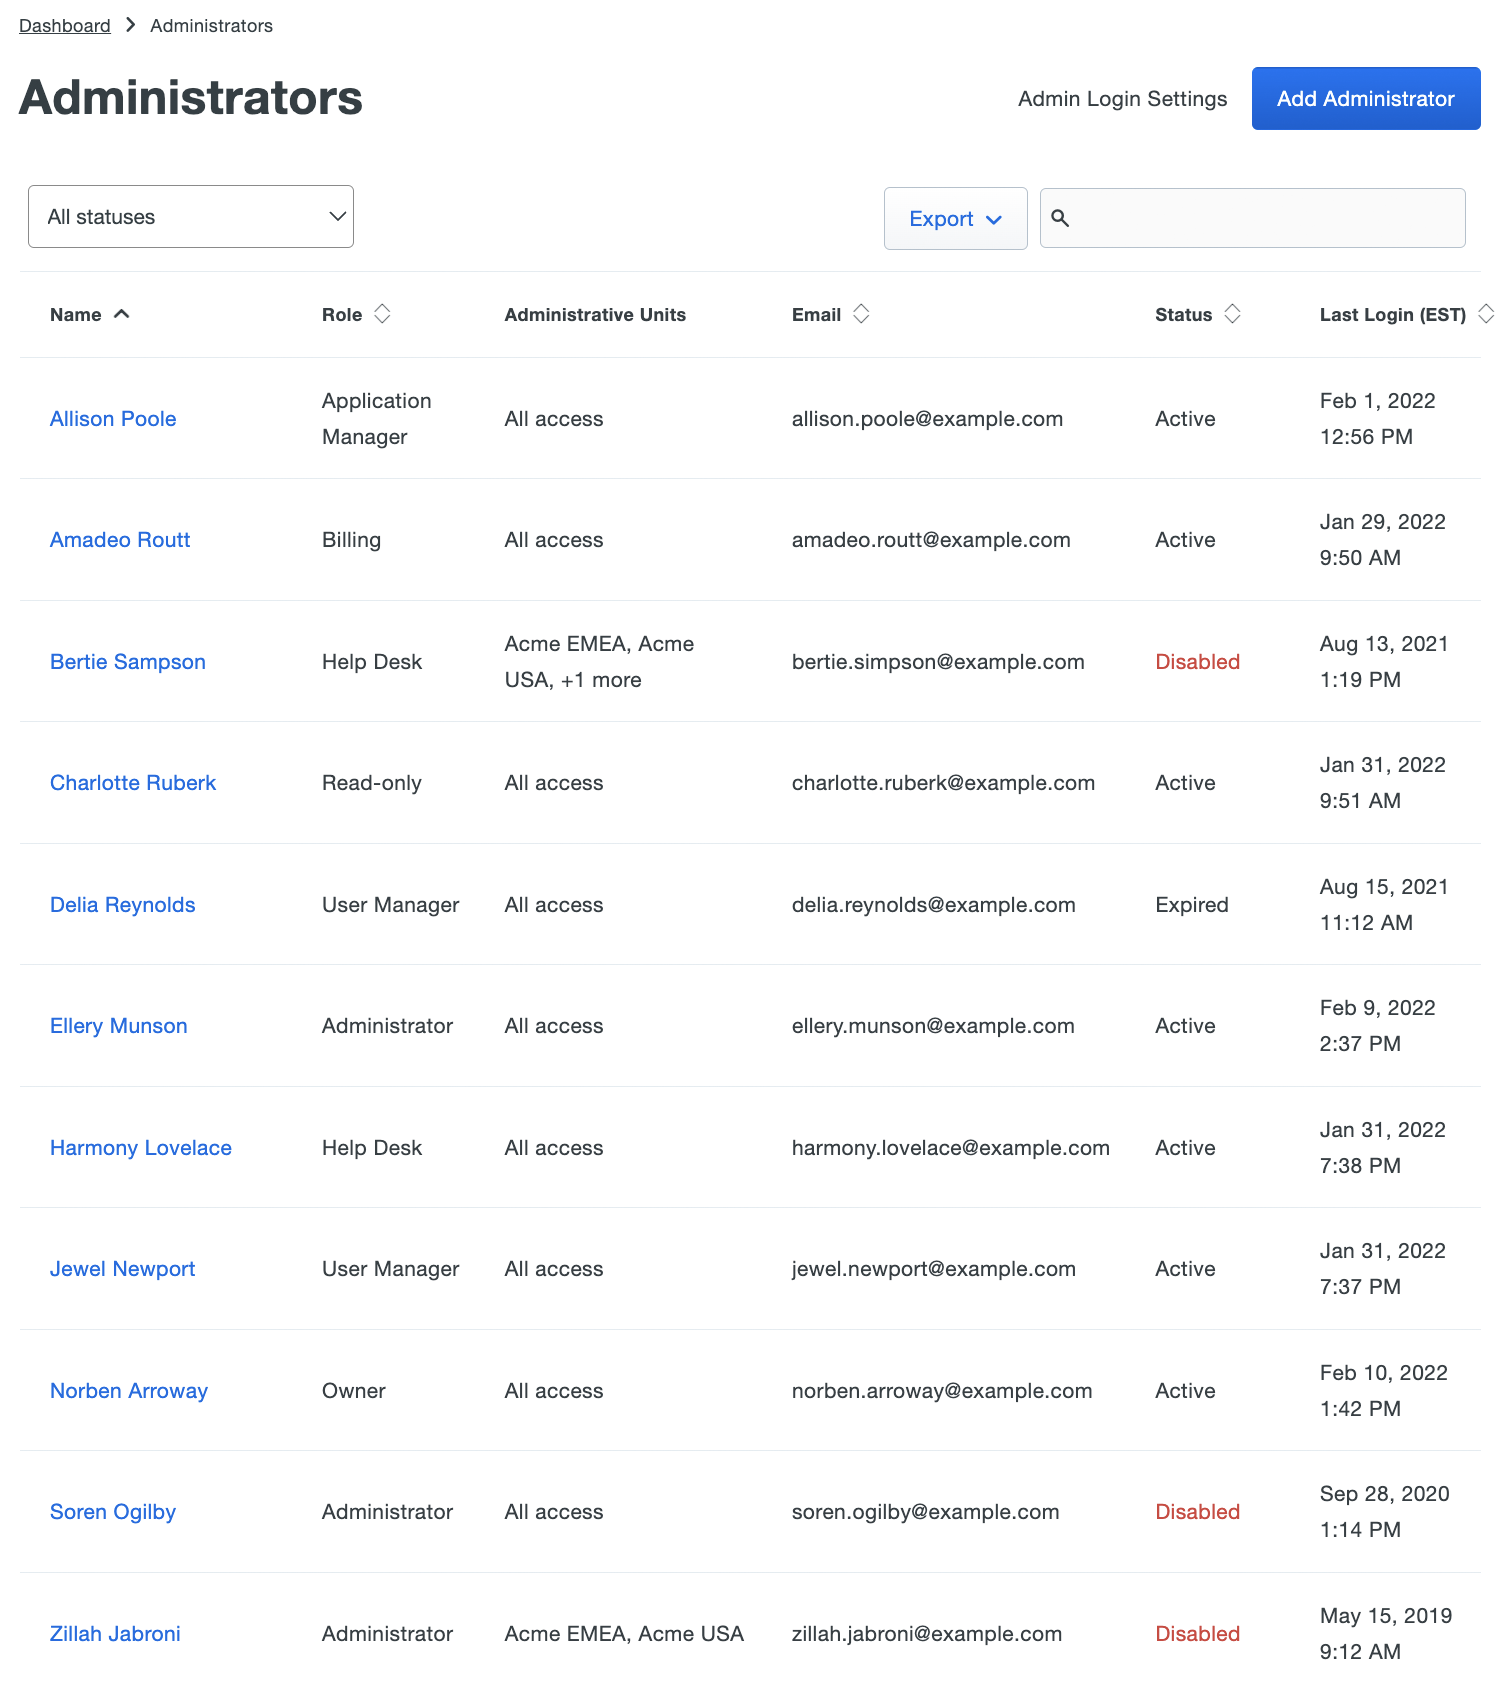 List of Administrators